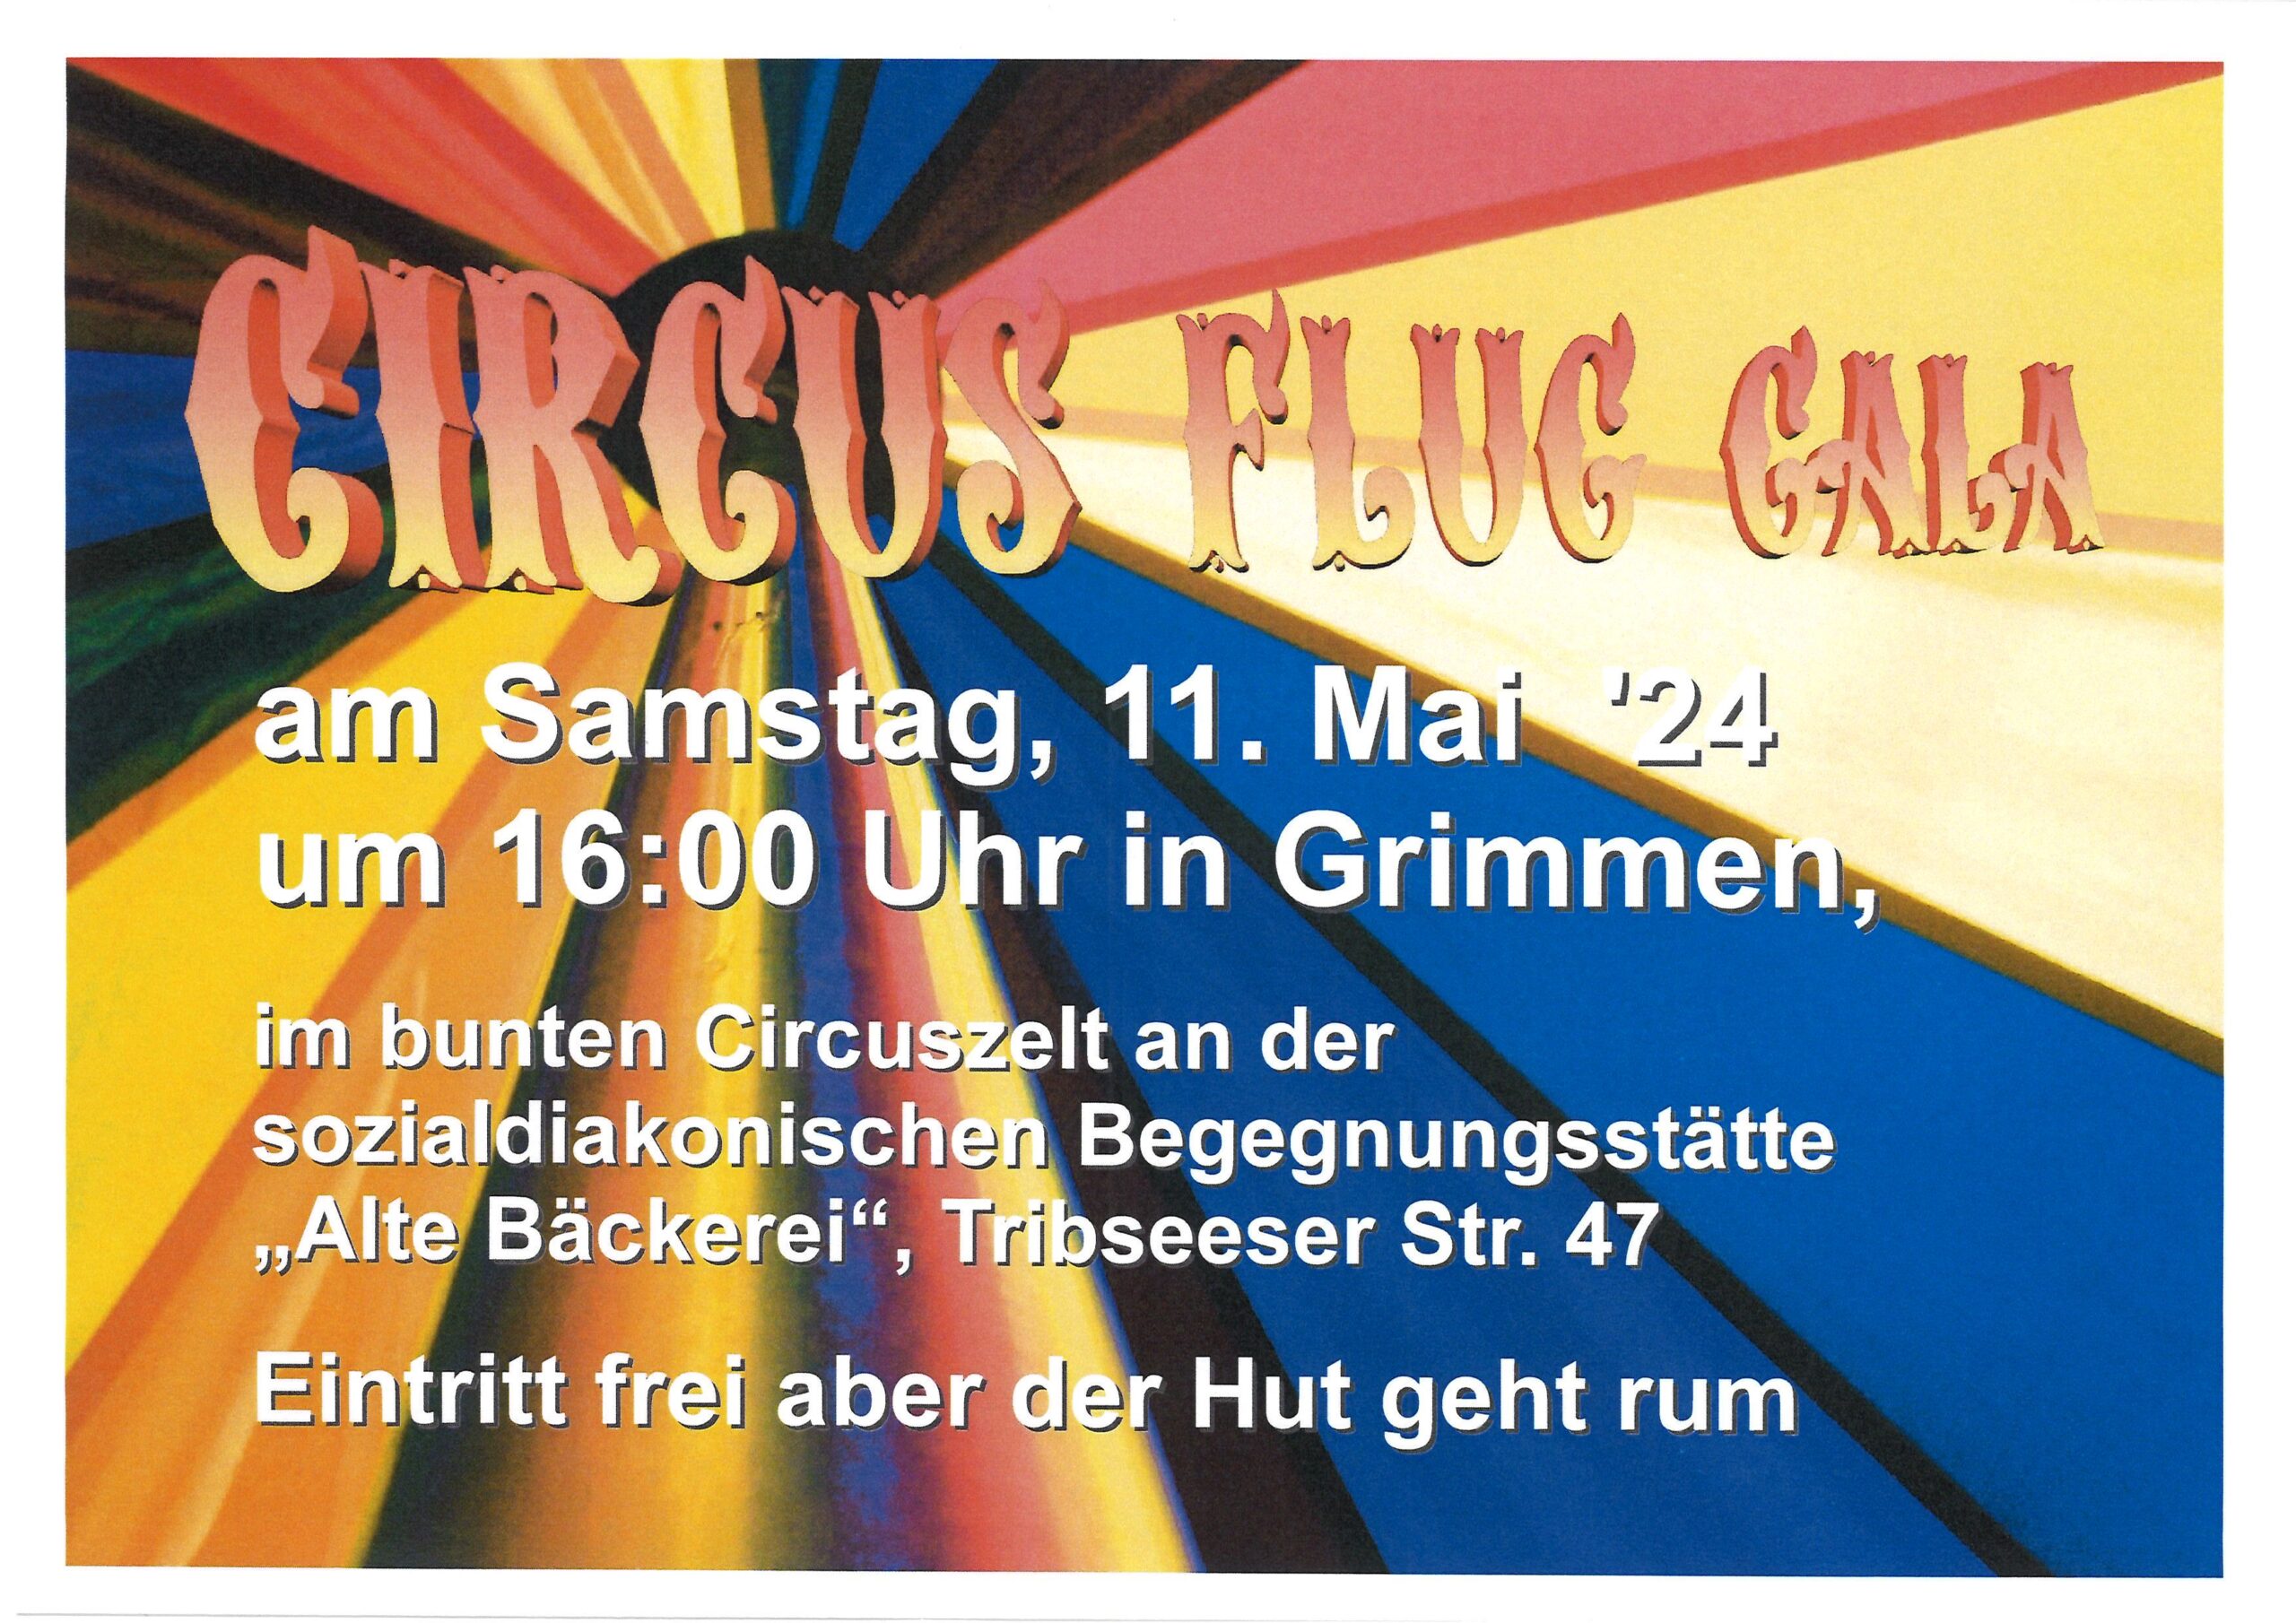 Circus Flug Gala in Grimmen